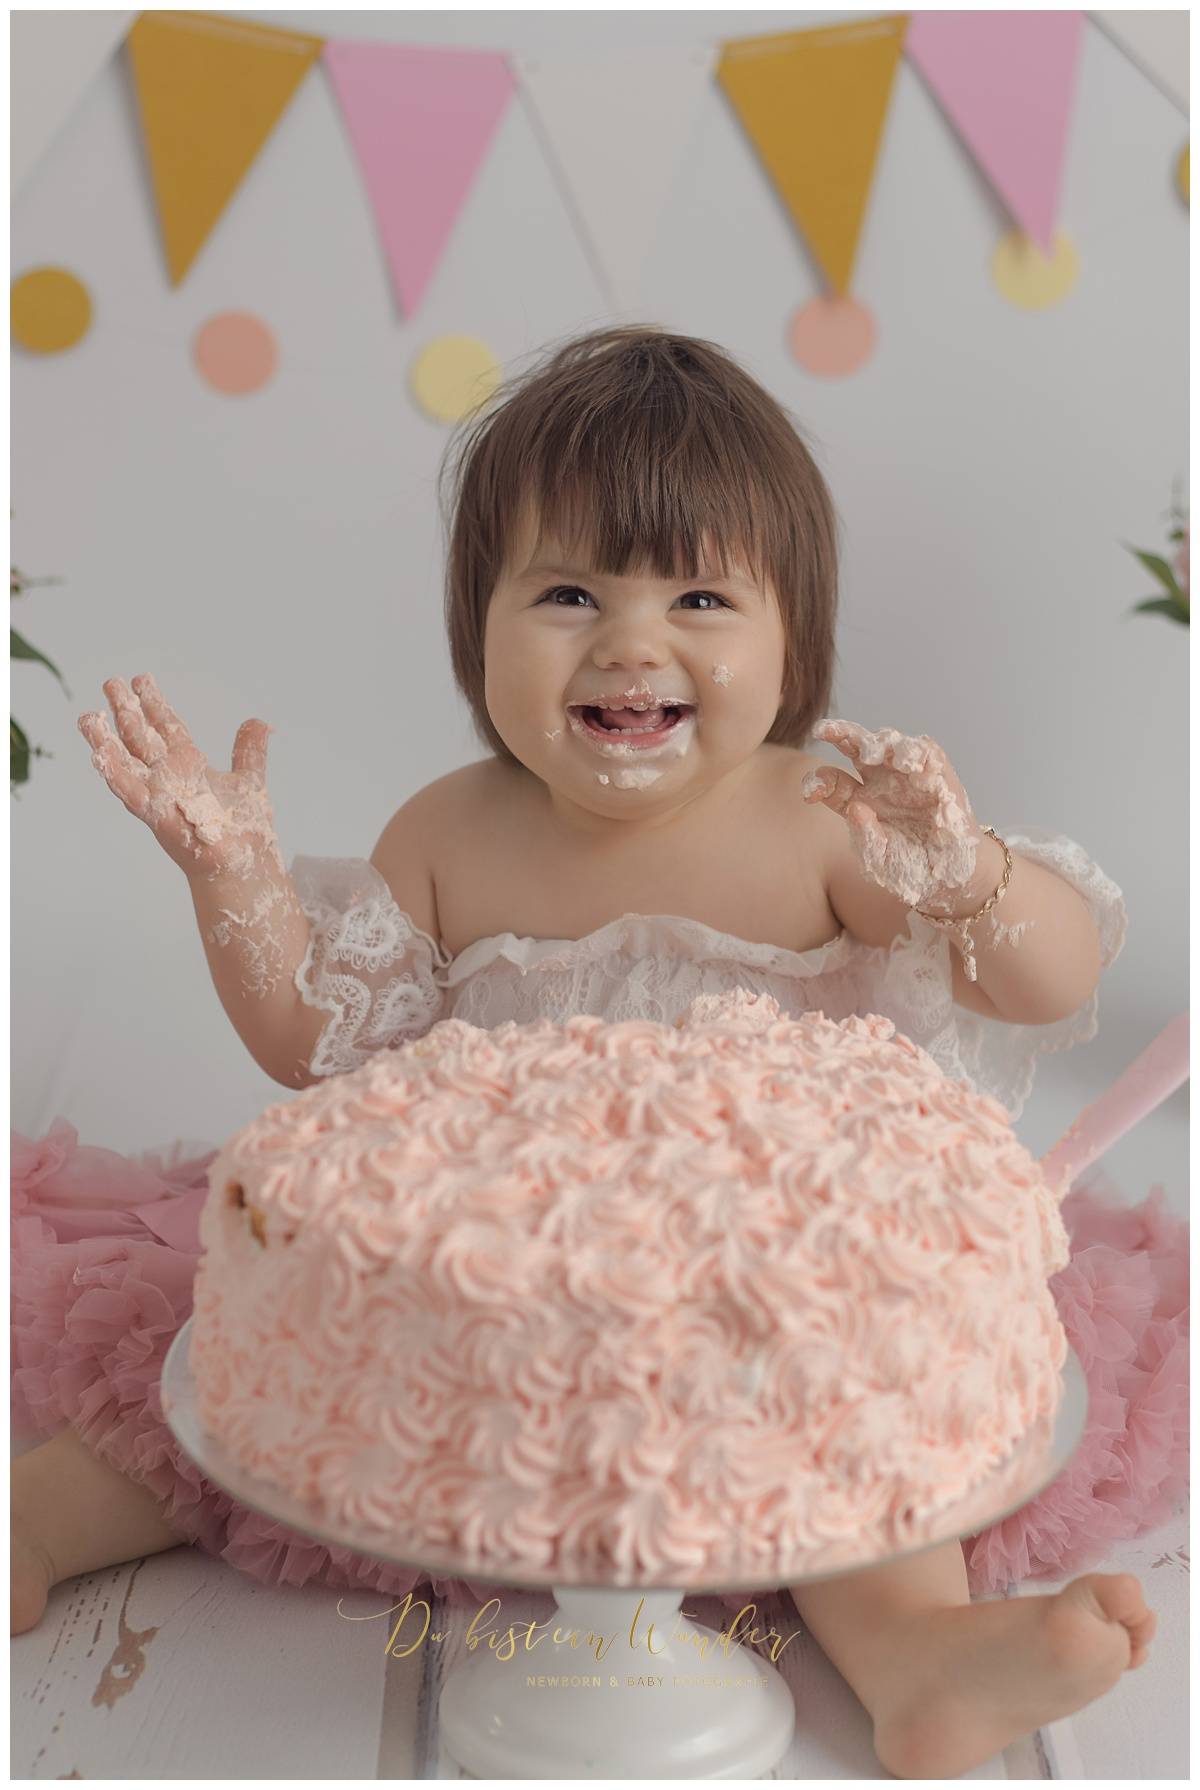 Cake Smash- & Smile Splash Shooting(s) im speziellen Baby Foto Atelier